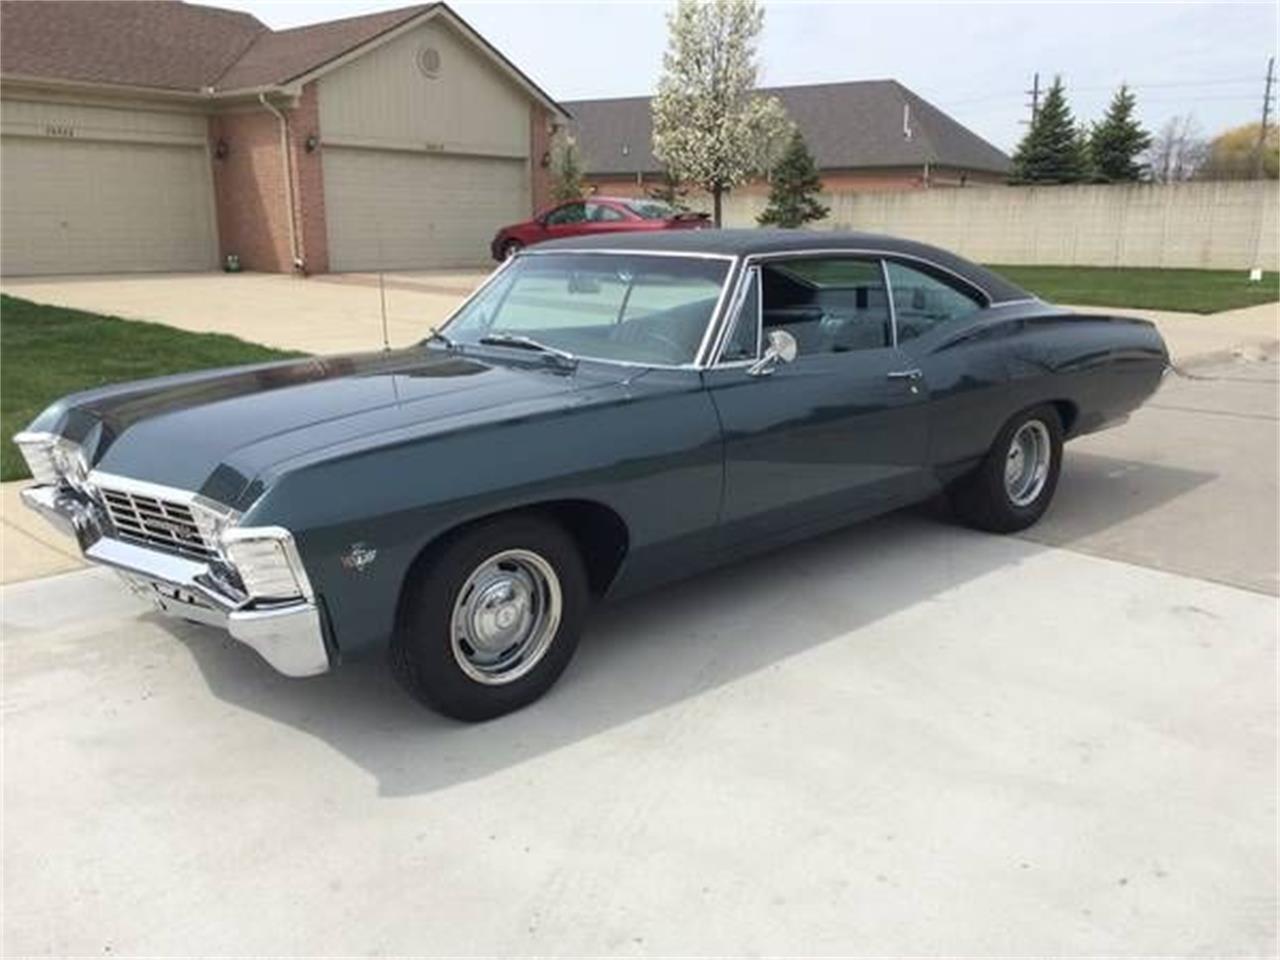 1967 Chevrolet Impala for sale in Cadillac, MI.